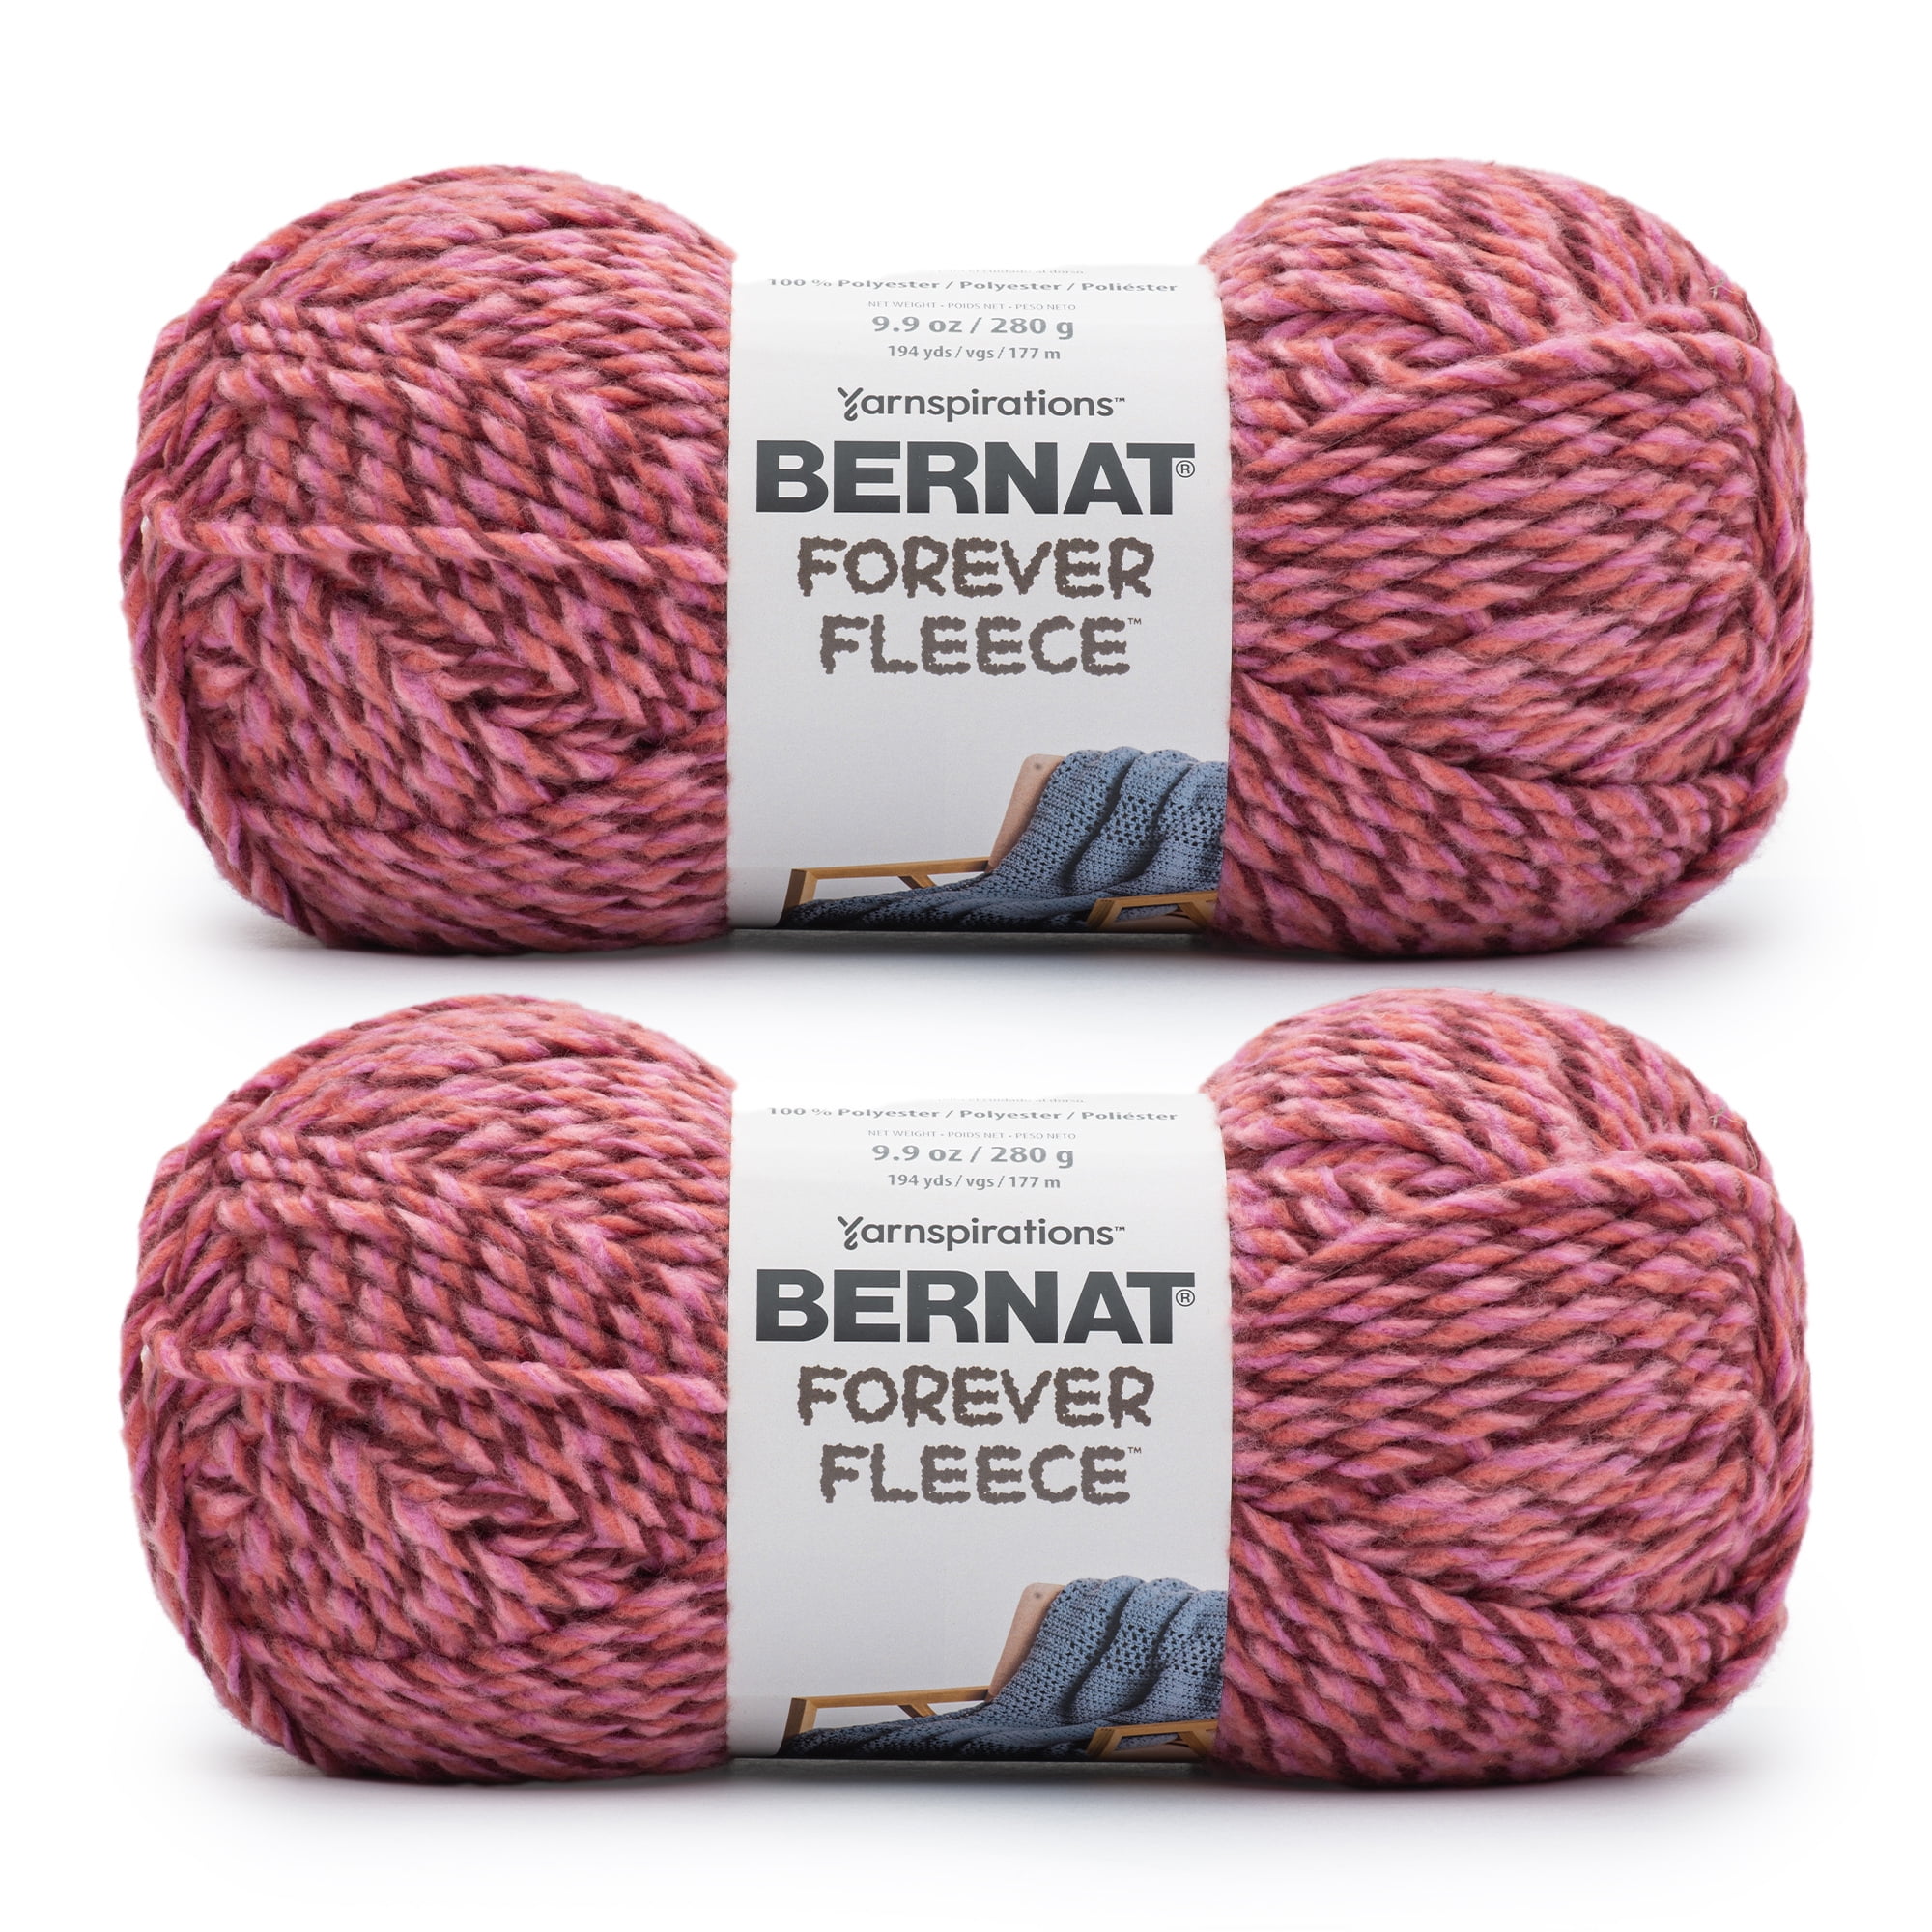 Bernat Forever Fleece Yarn 280g -  Norway